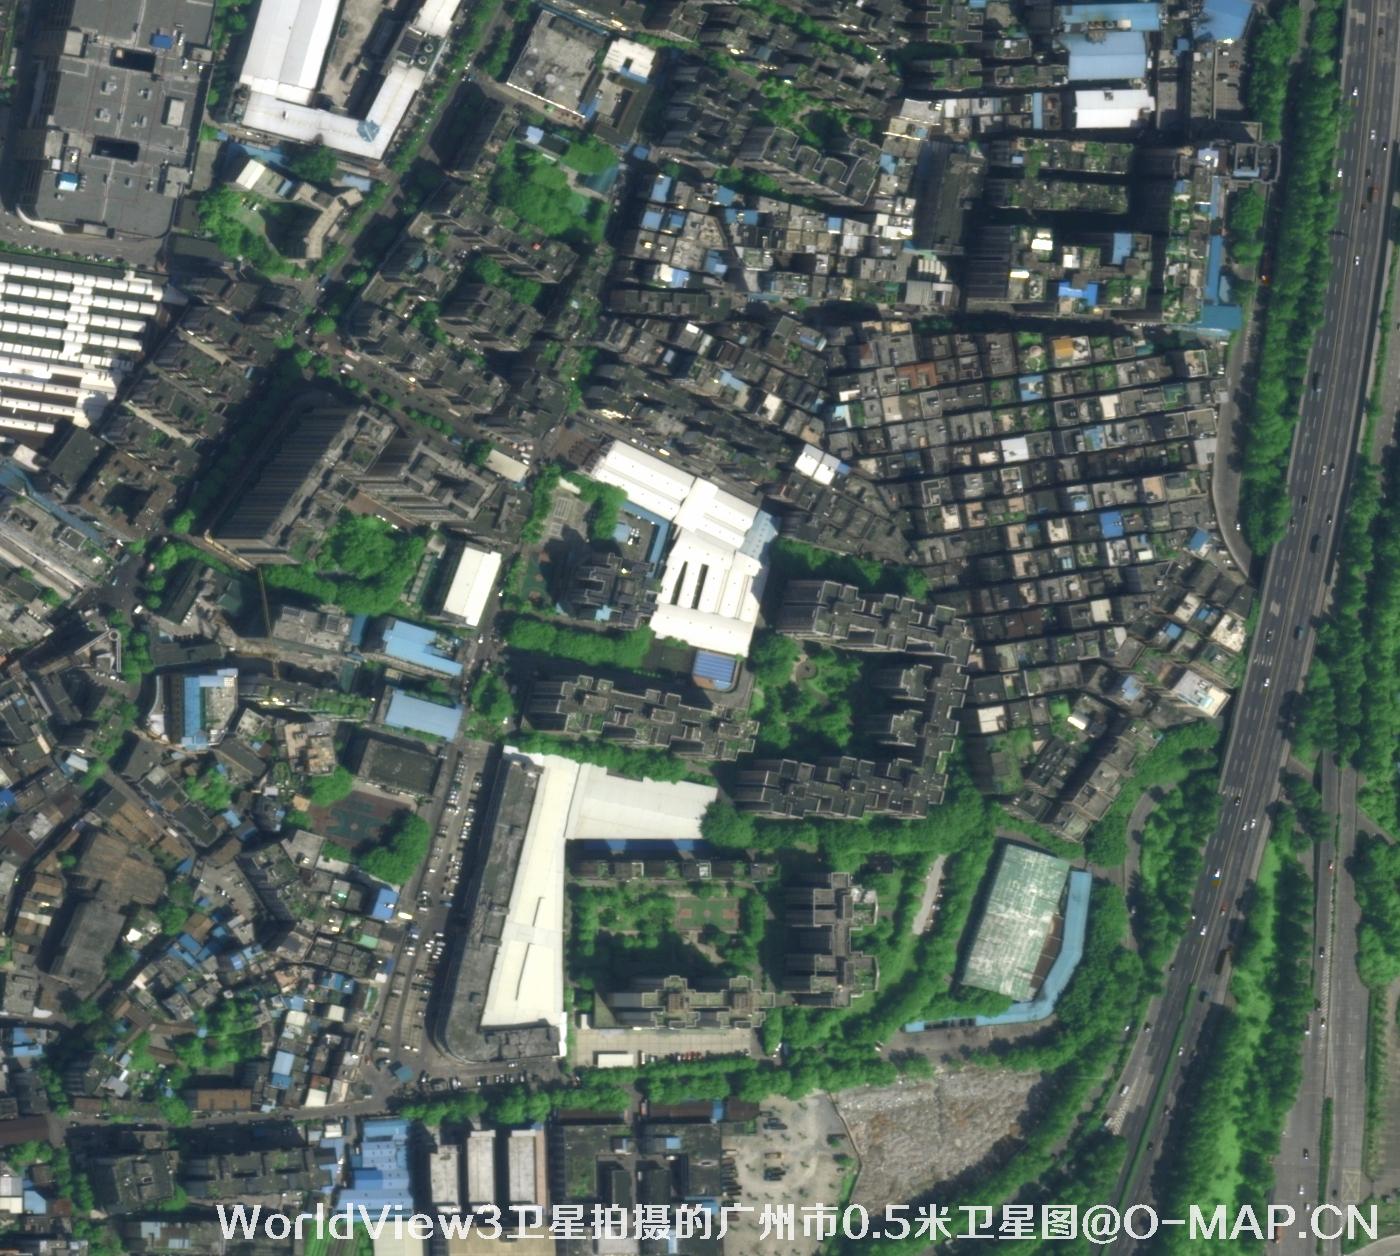 WorldView3卫星2014年拍摄的广州市0.5米卫星图